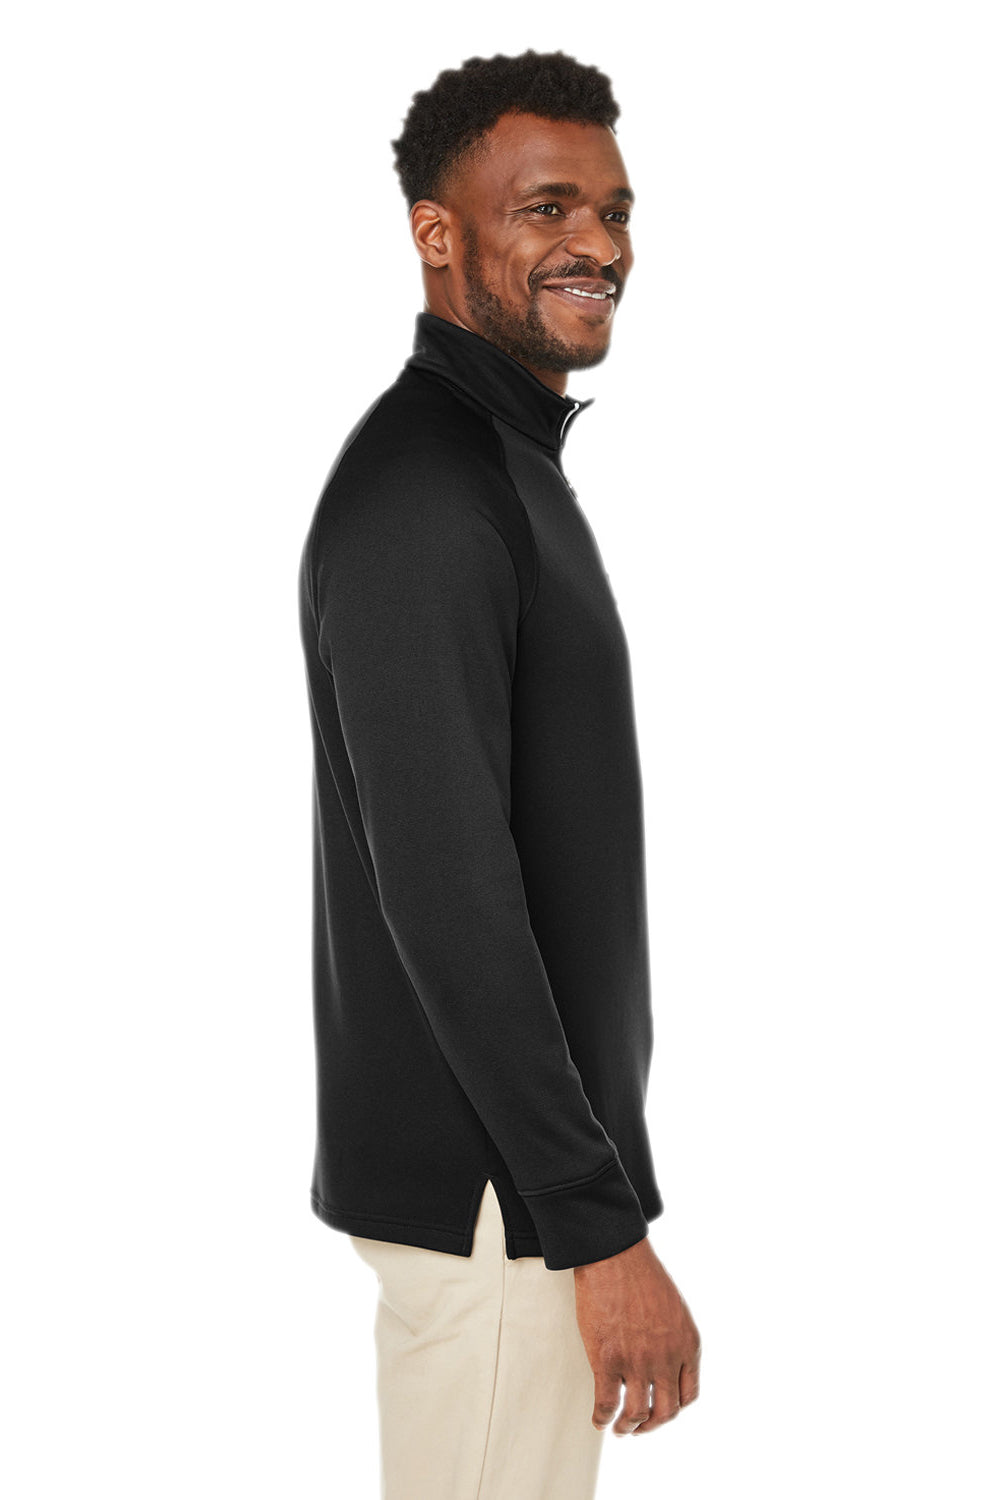 Core 365 CE801 Mens Fusion ChromaSoft Fleece 1/4 Zip Sweatshirt Black Side